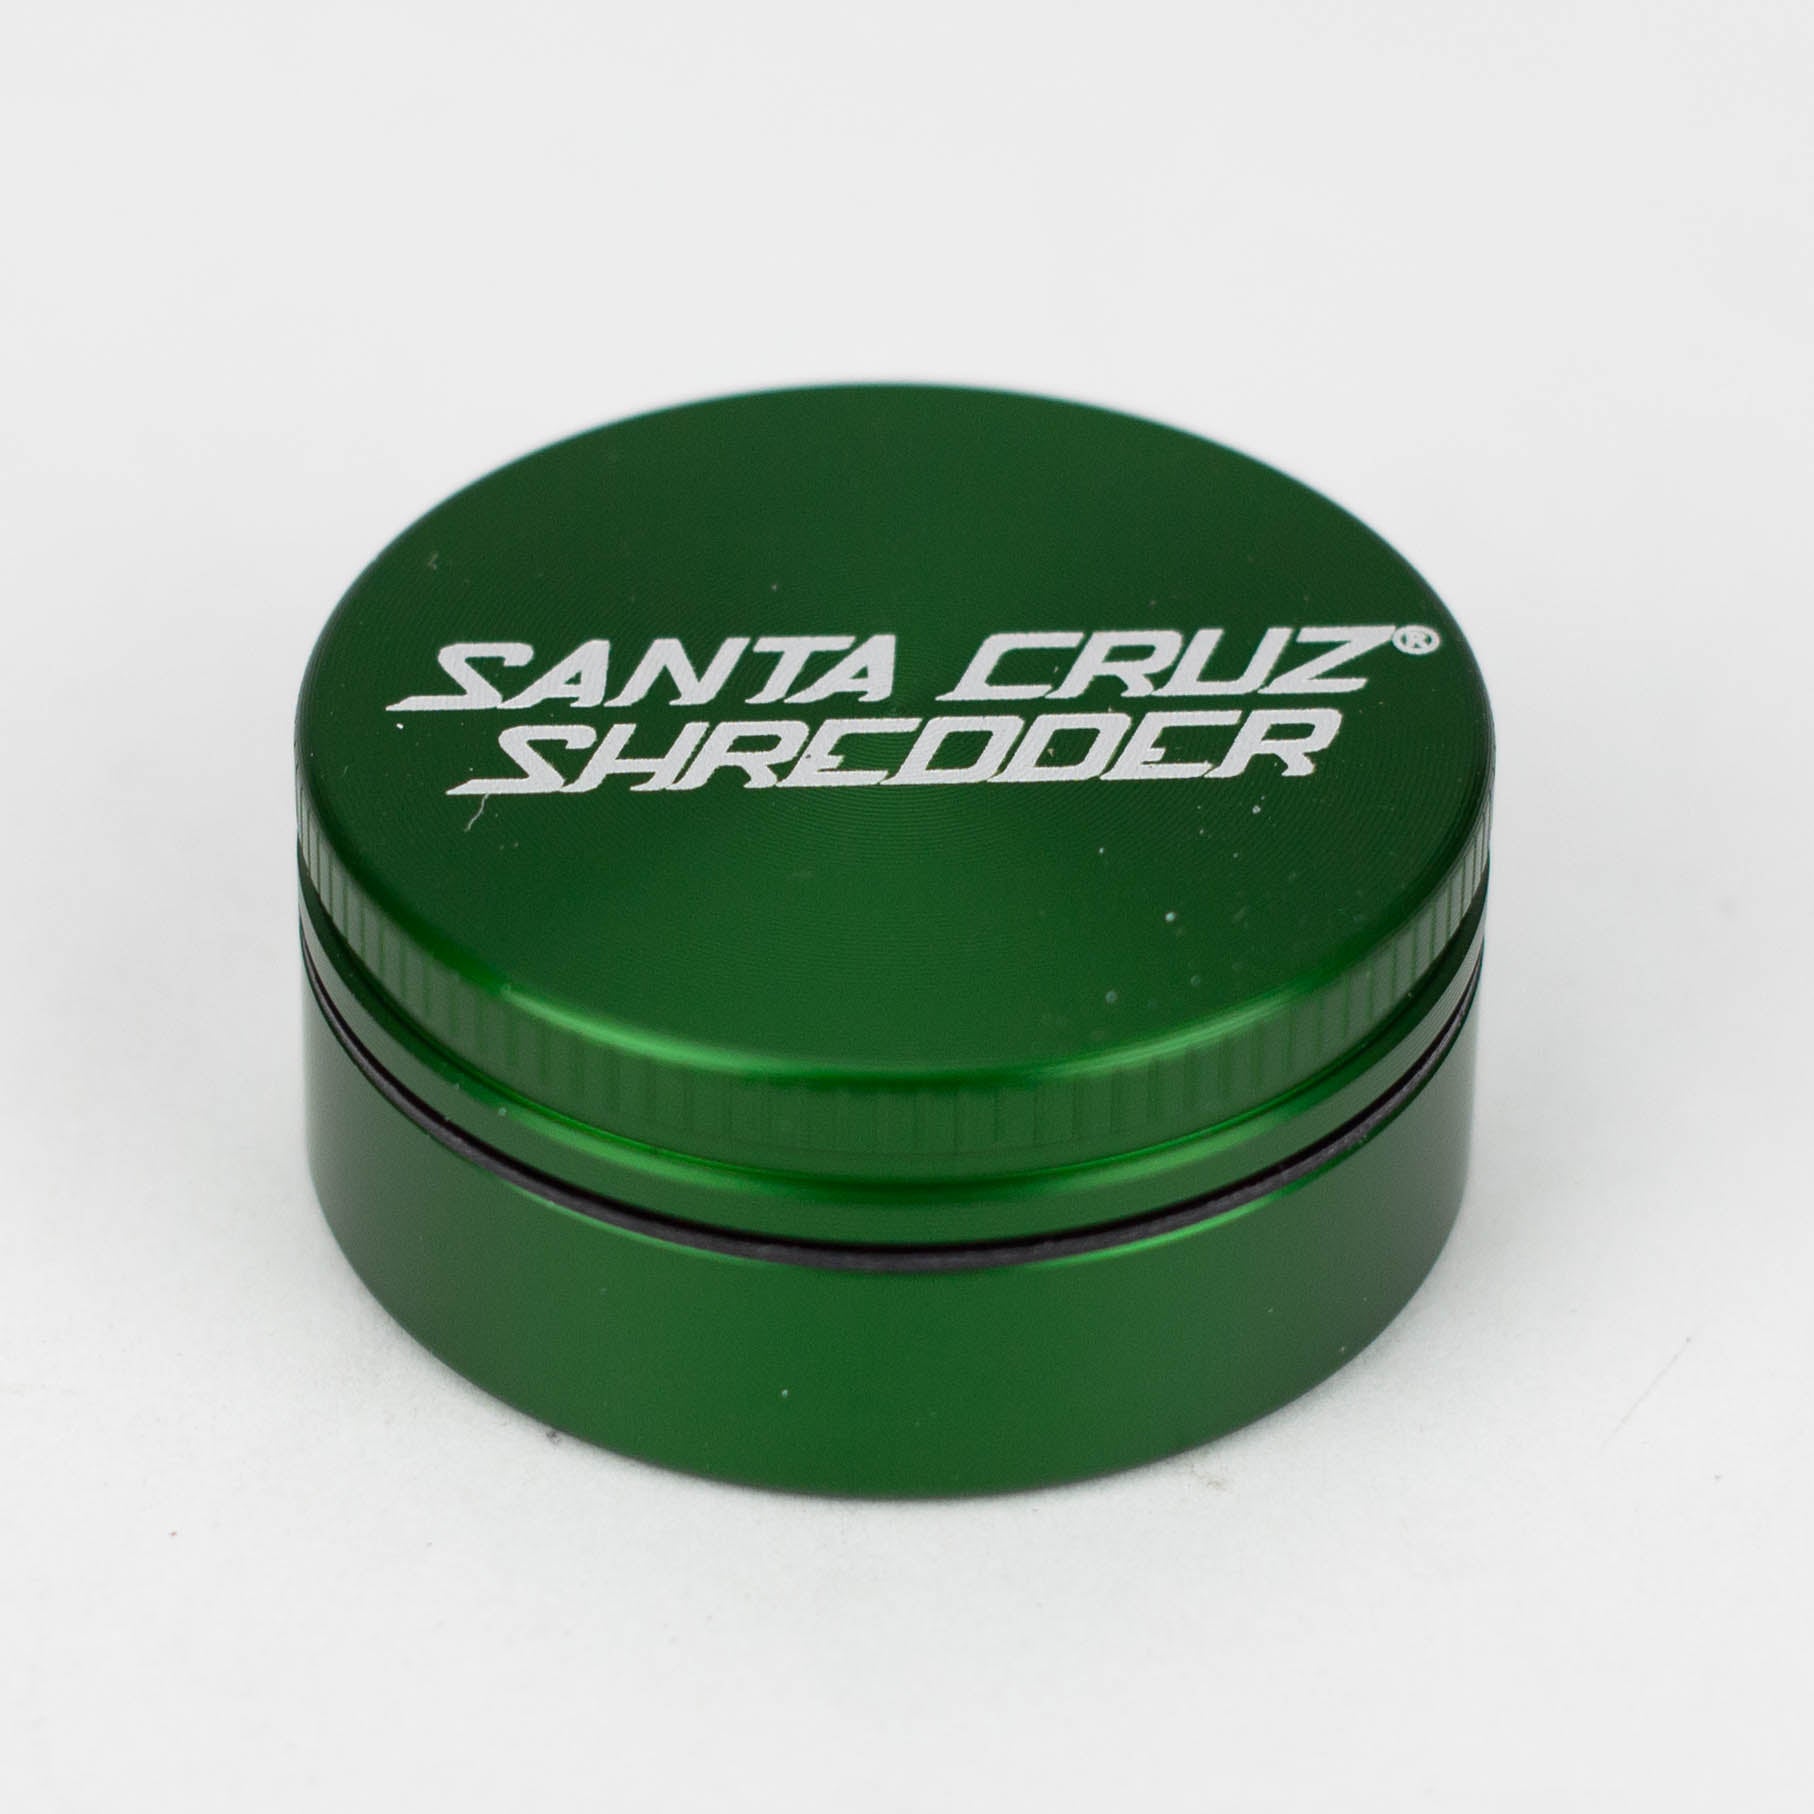 SANTA CRUZ SHREDDER | Small 2-piece Shredder_3